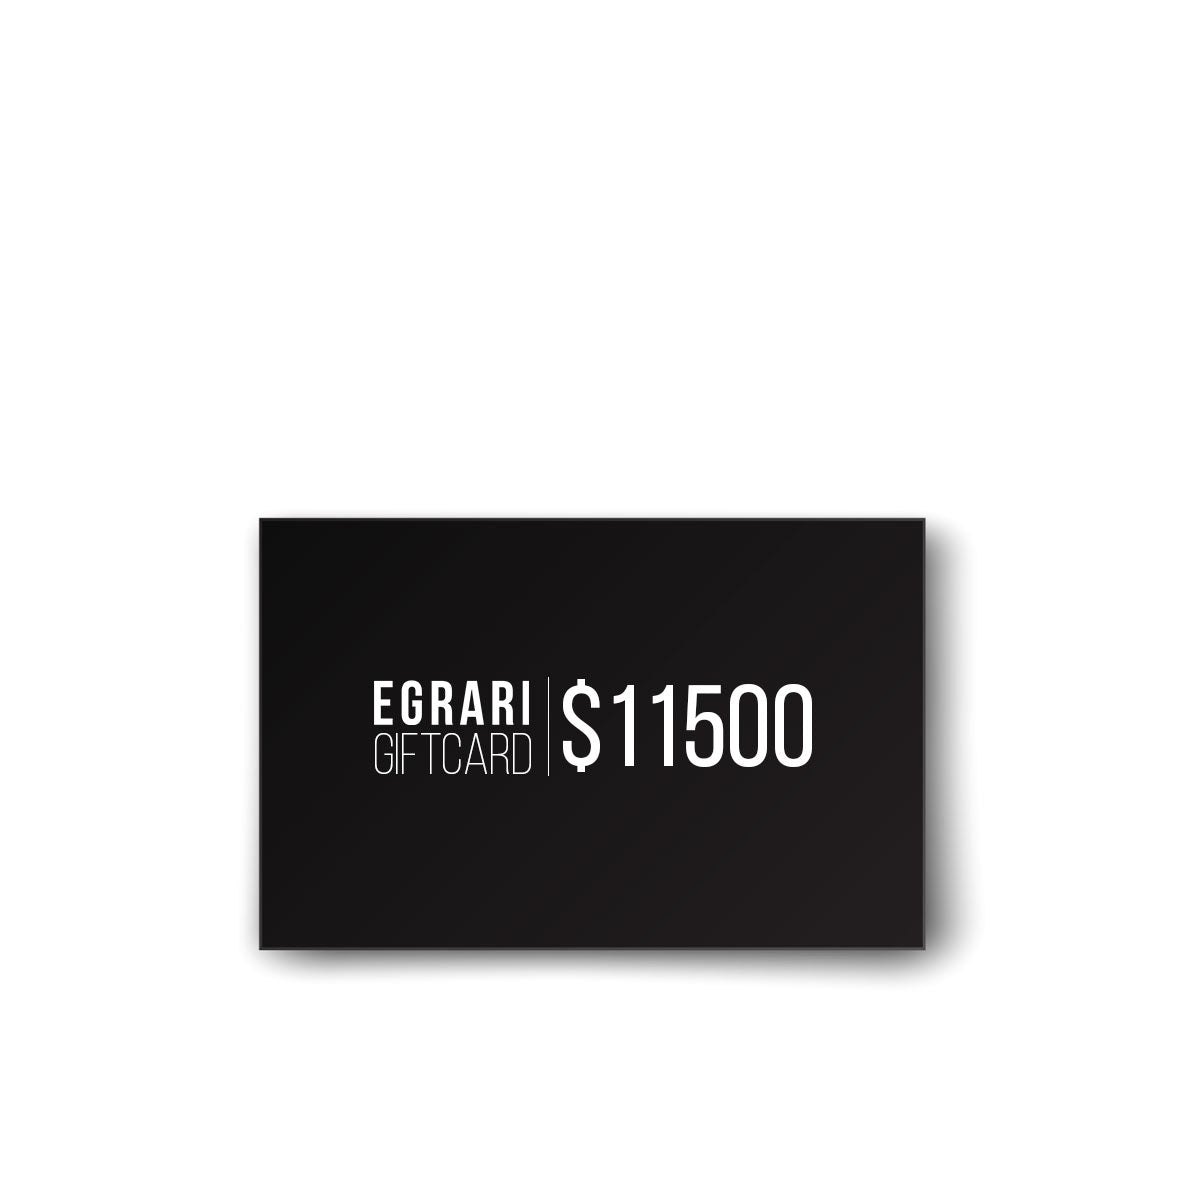 Egrari Night of Beauty gift card save $1500